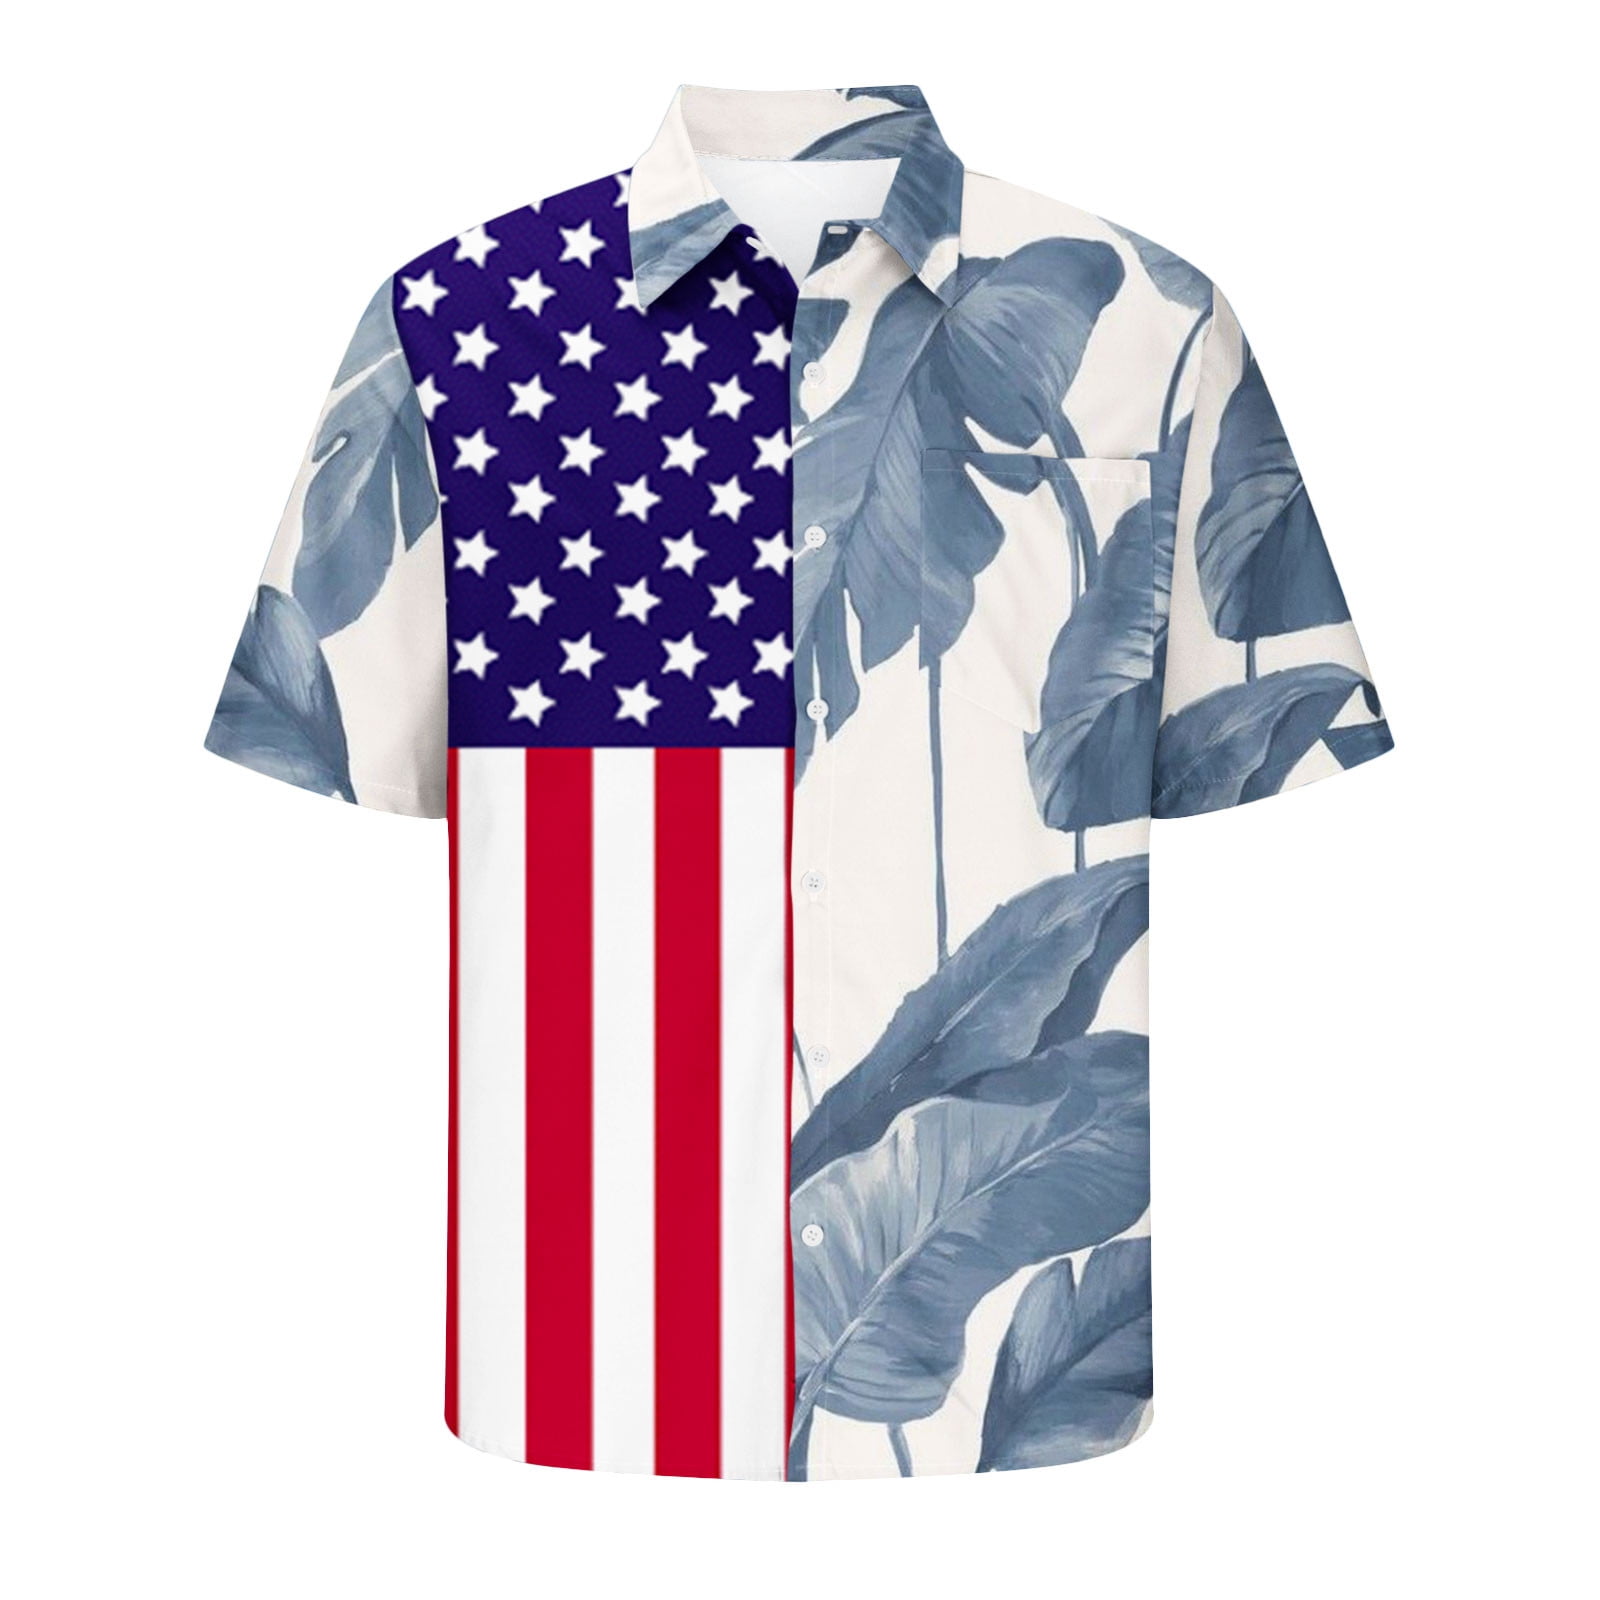 QIPOPIQ Clearance Men's Shirts 4th of July American Tees Turn-down